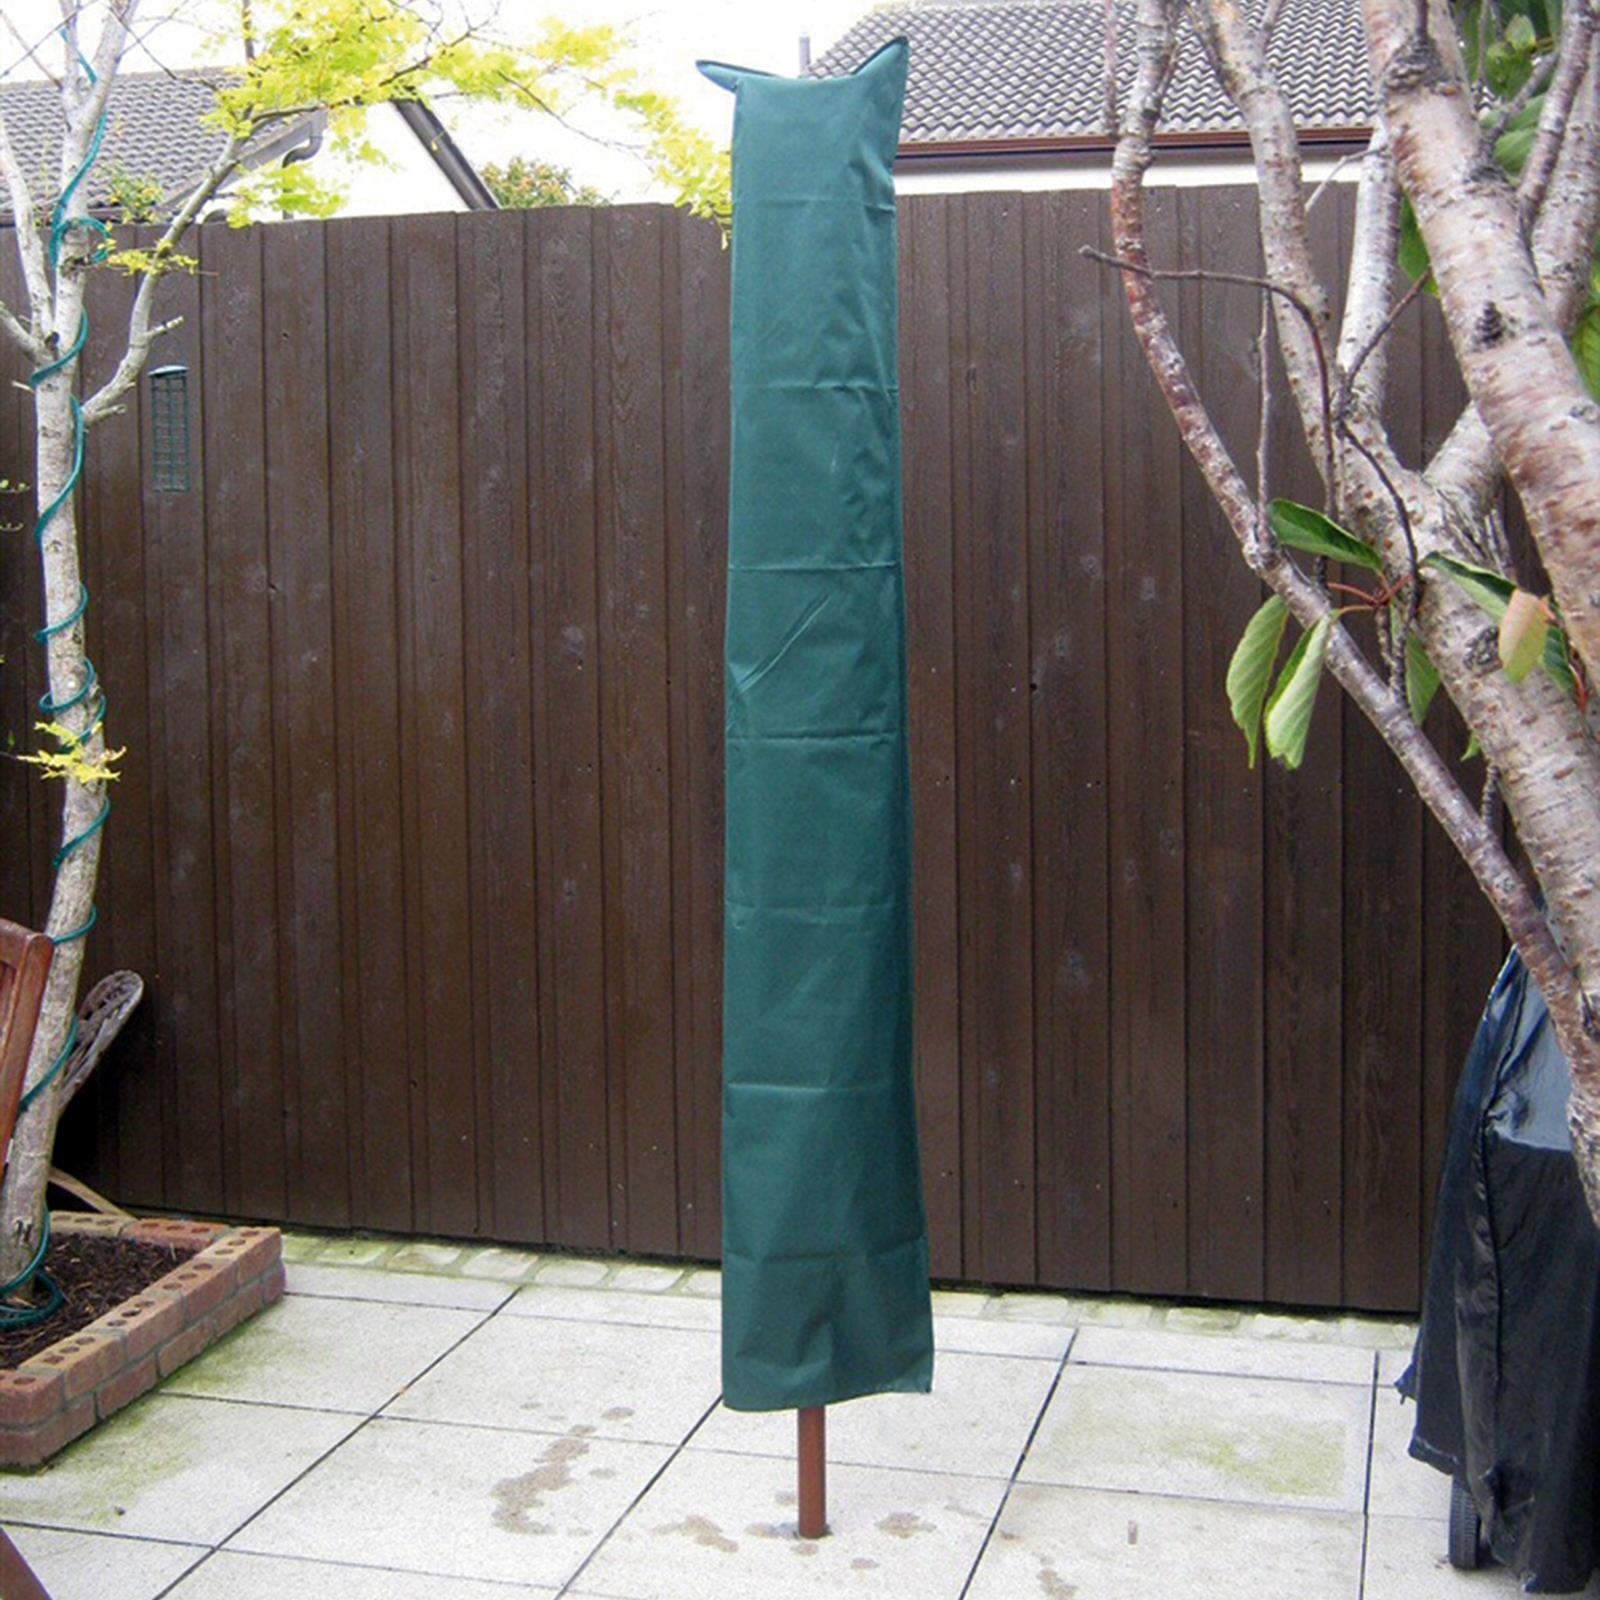 Silverline Rotary Washing Line Cover Garden Parasol Umbrella Waterproof Tear-Resistant